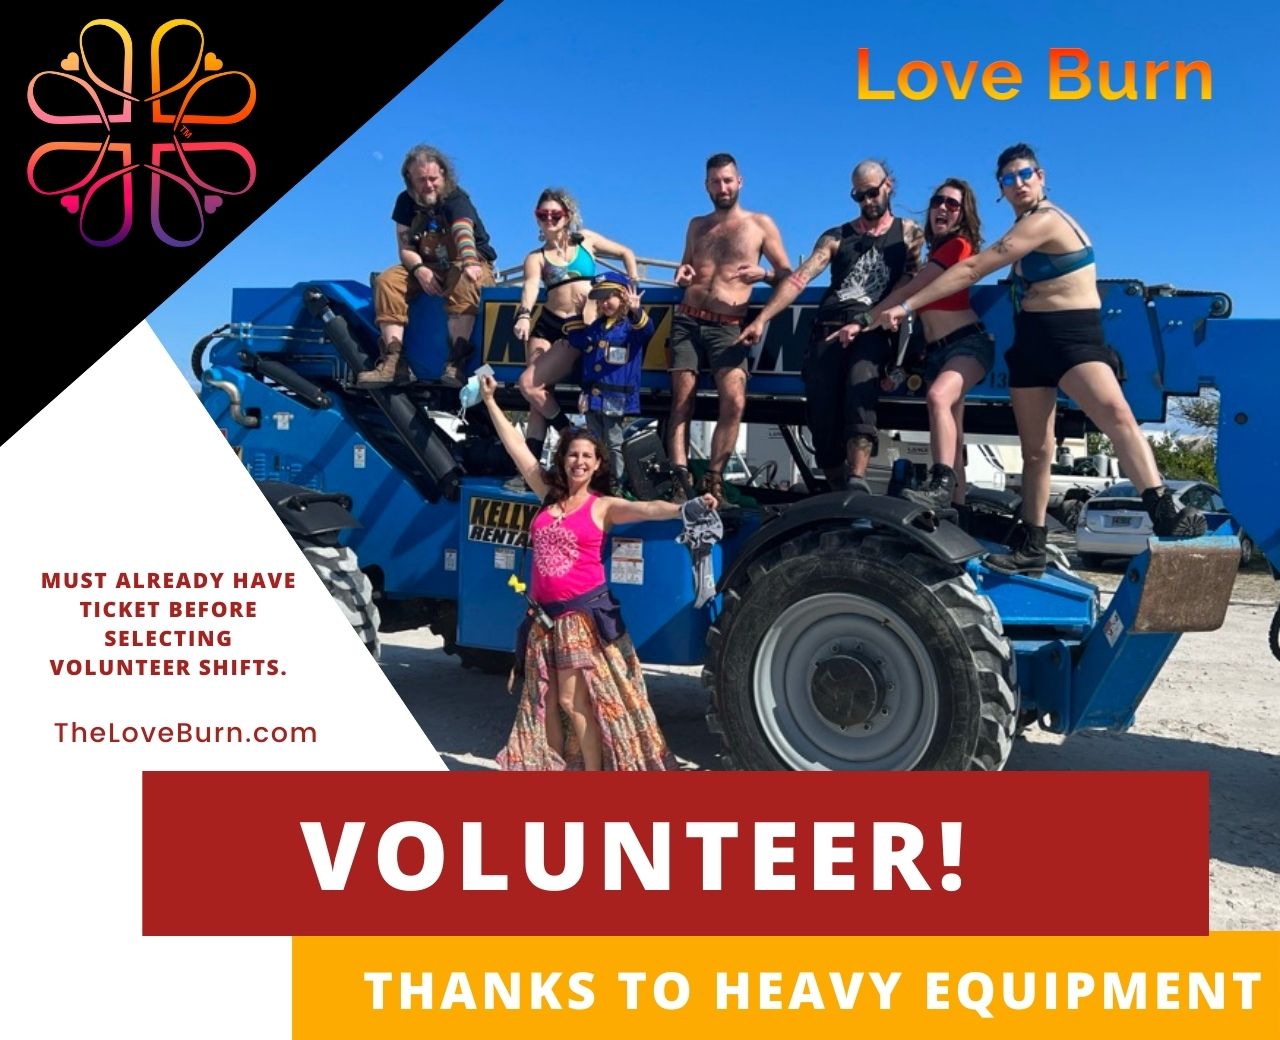 Love Burn Official Regional Burning Man Event in Miami